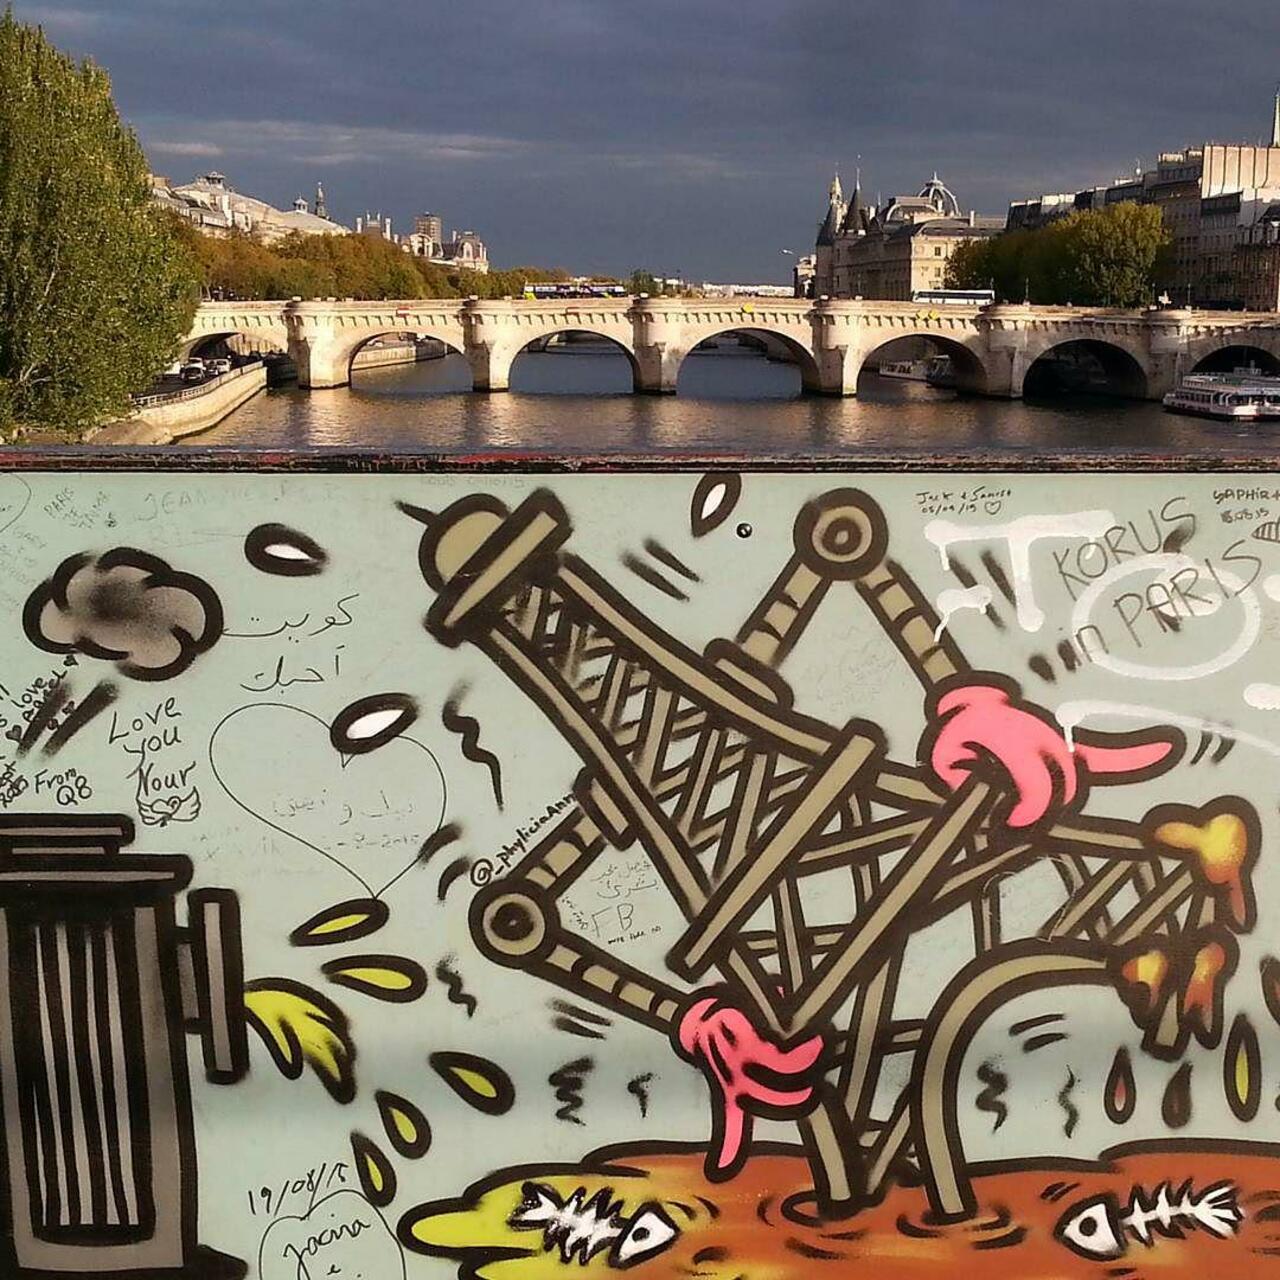 #Paris #graffiti photo by @fotoflaneuse http://ift.tt/1JYCMxA #StreetArt http://t.co/PWlLaD09Gr